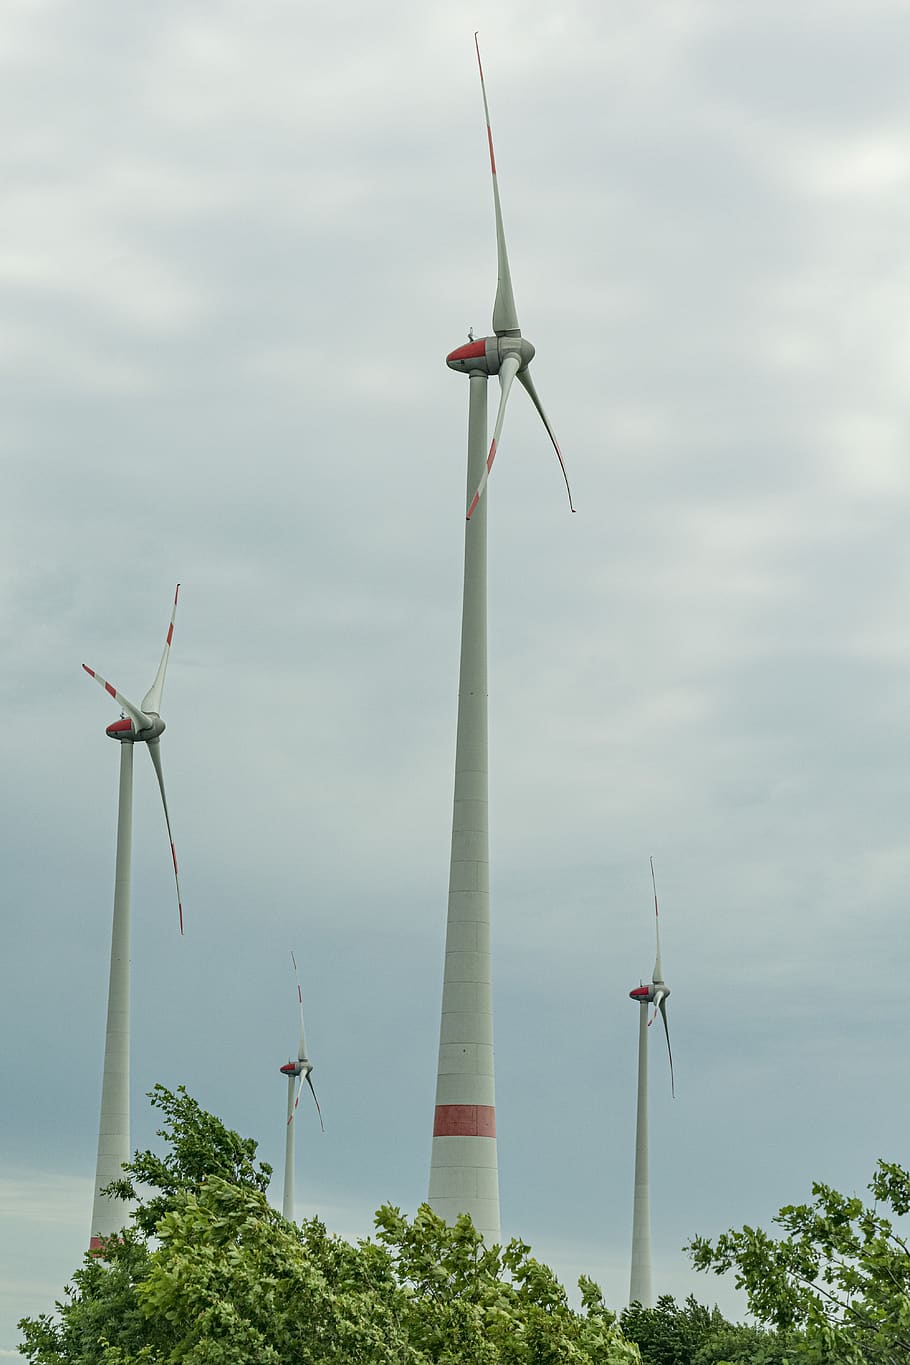 wind edges, current, power generation, wind energy, wind power, energy production, environmentally friendly, pinwheel, sky, turbine